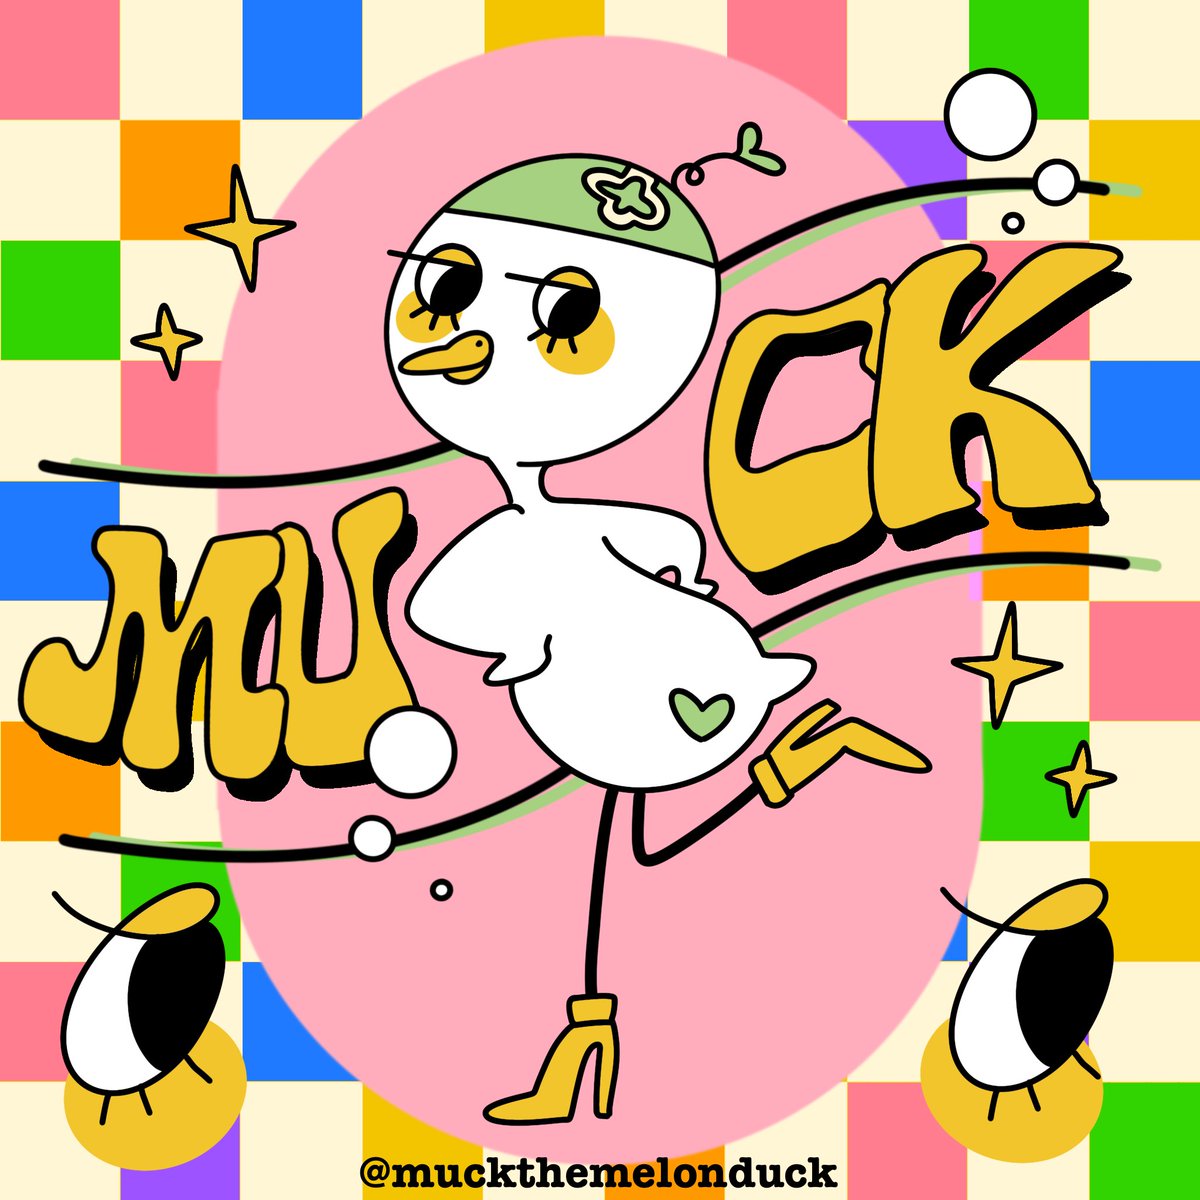 #Muck #muckthemelonduck #duck #comics #art #storytime #memes #香港插畫 #漫畫 #噏muck #鴨 #頹廢 #荒謬 #y2k #y2kaesthetic  #y2kstyle